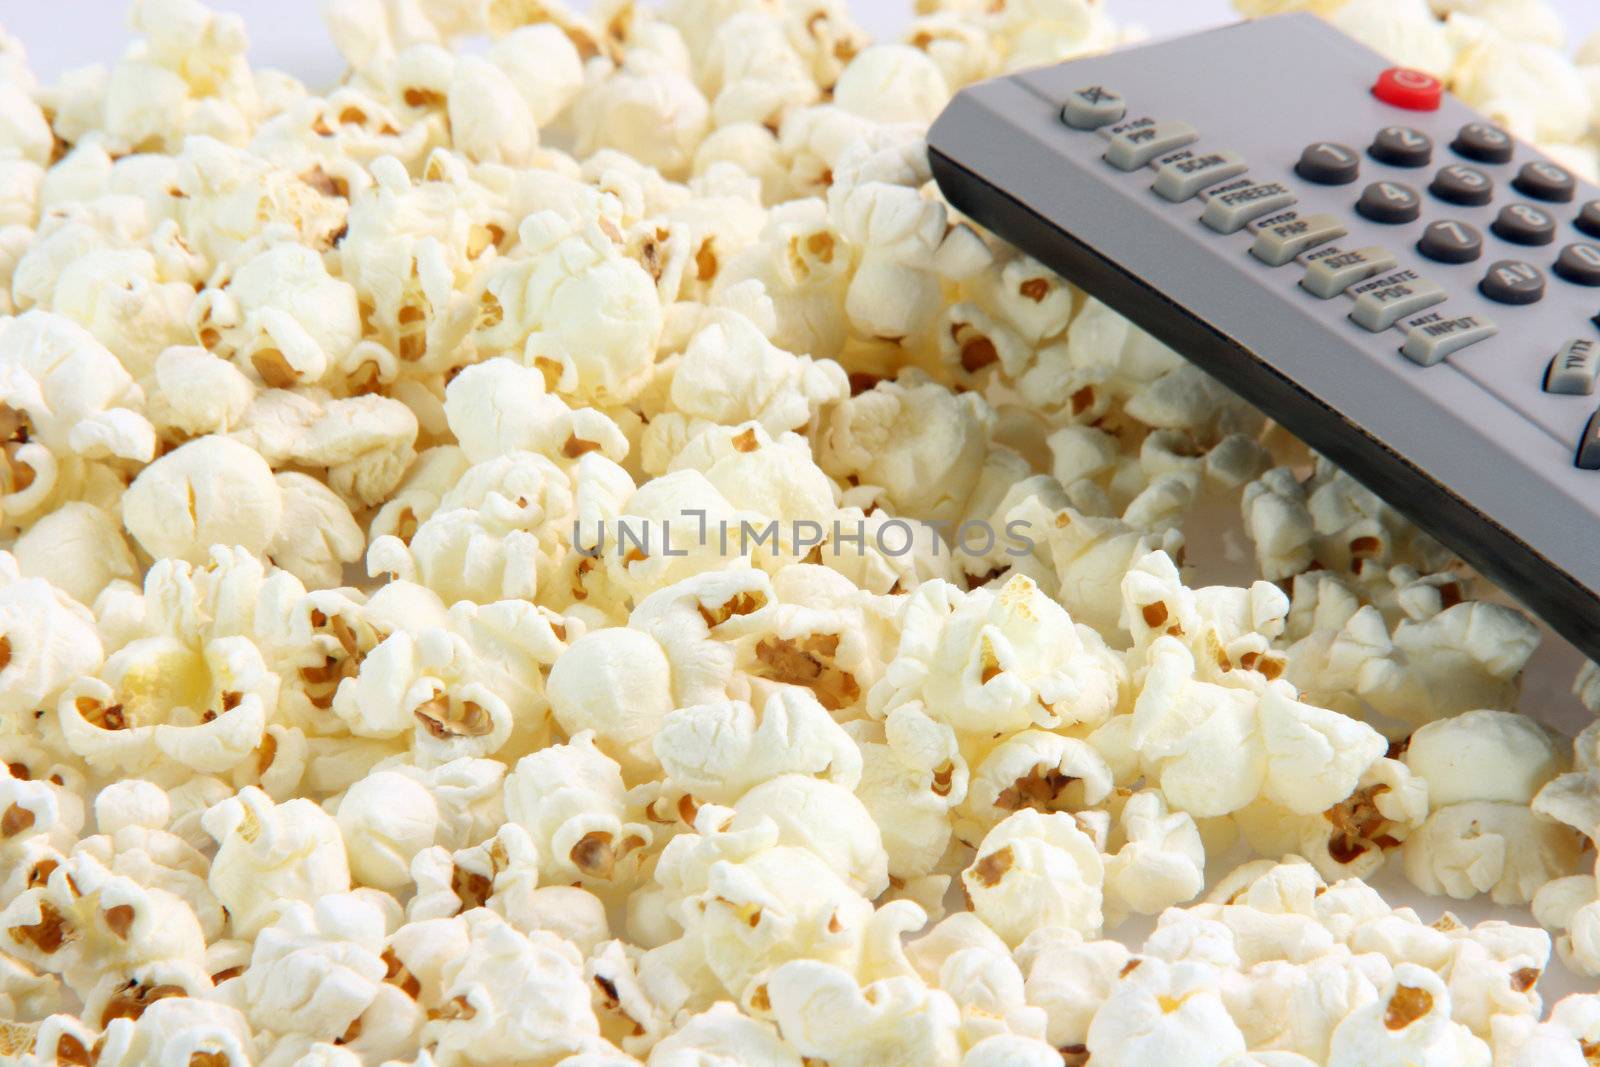 popcorn and remote control detail by forwardcom